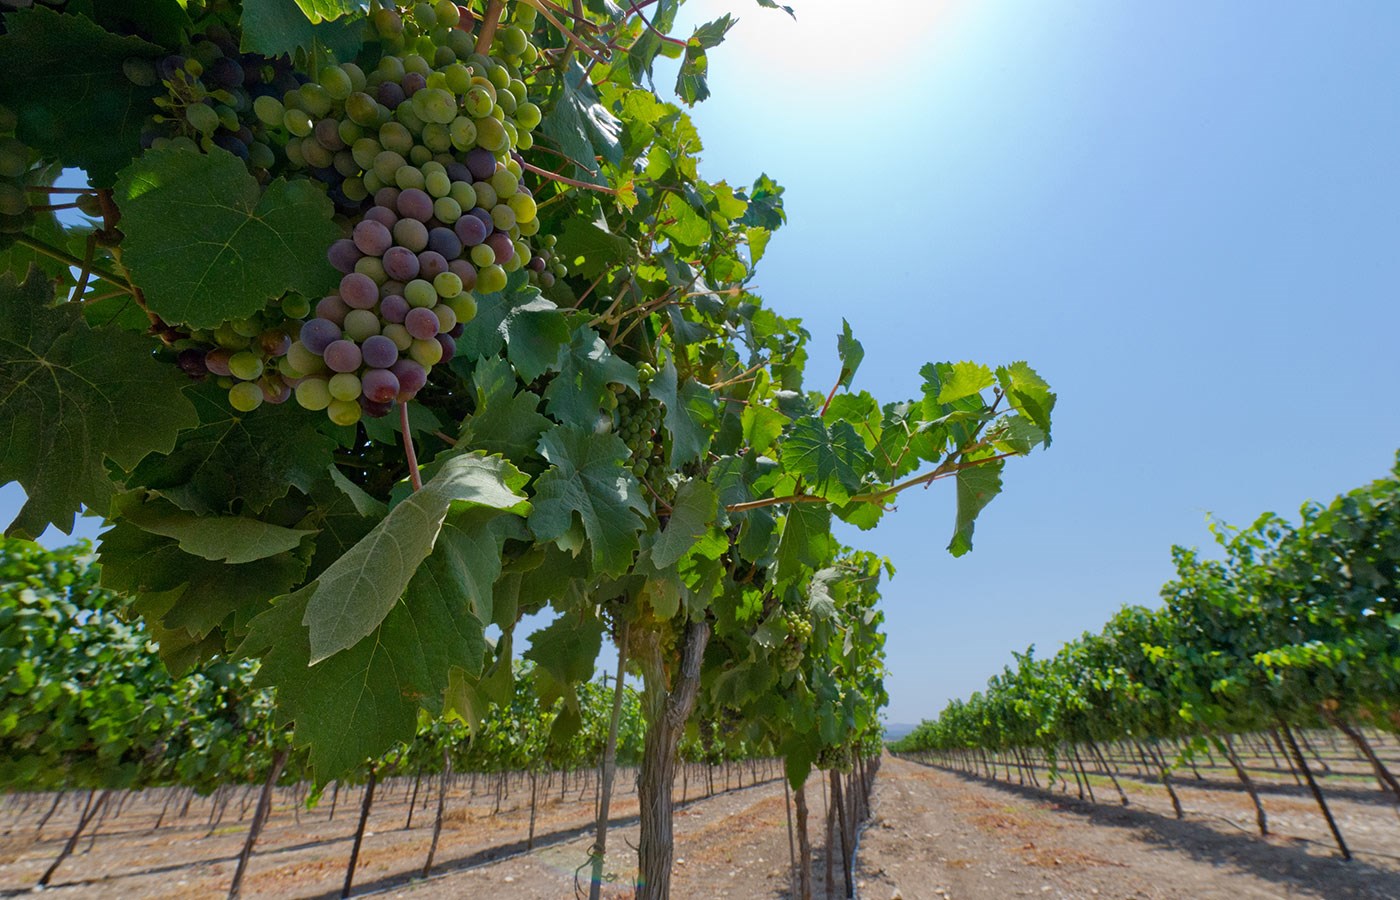 Explore wines from Israel - Taste history!